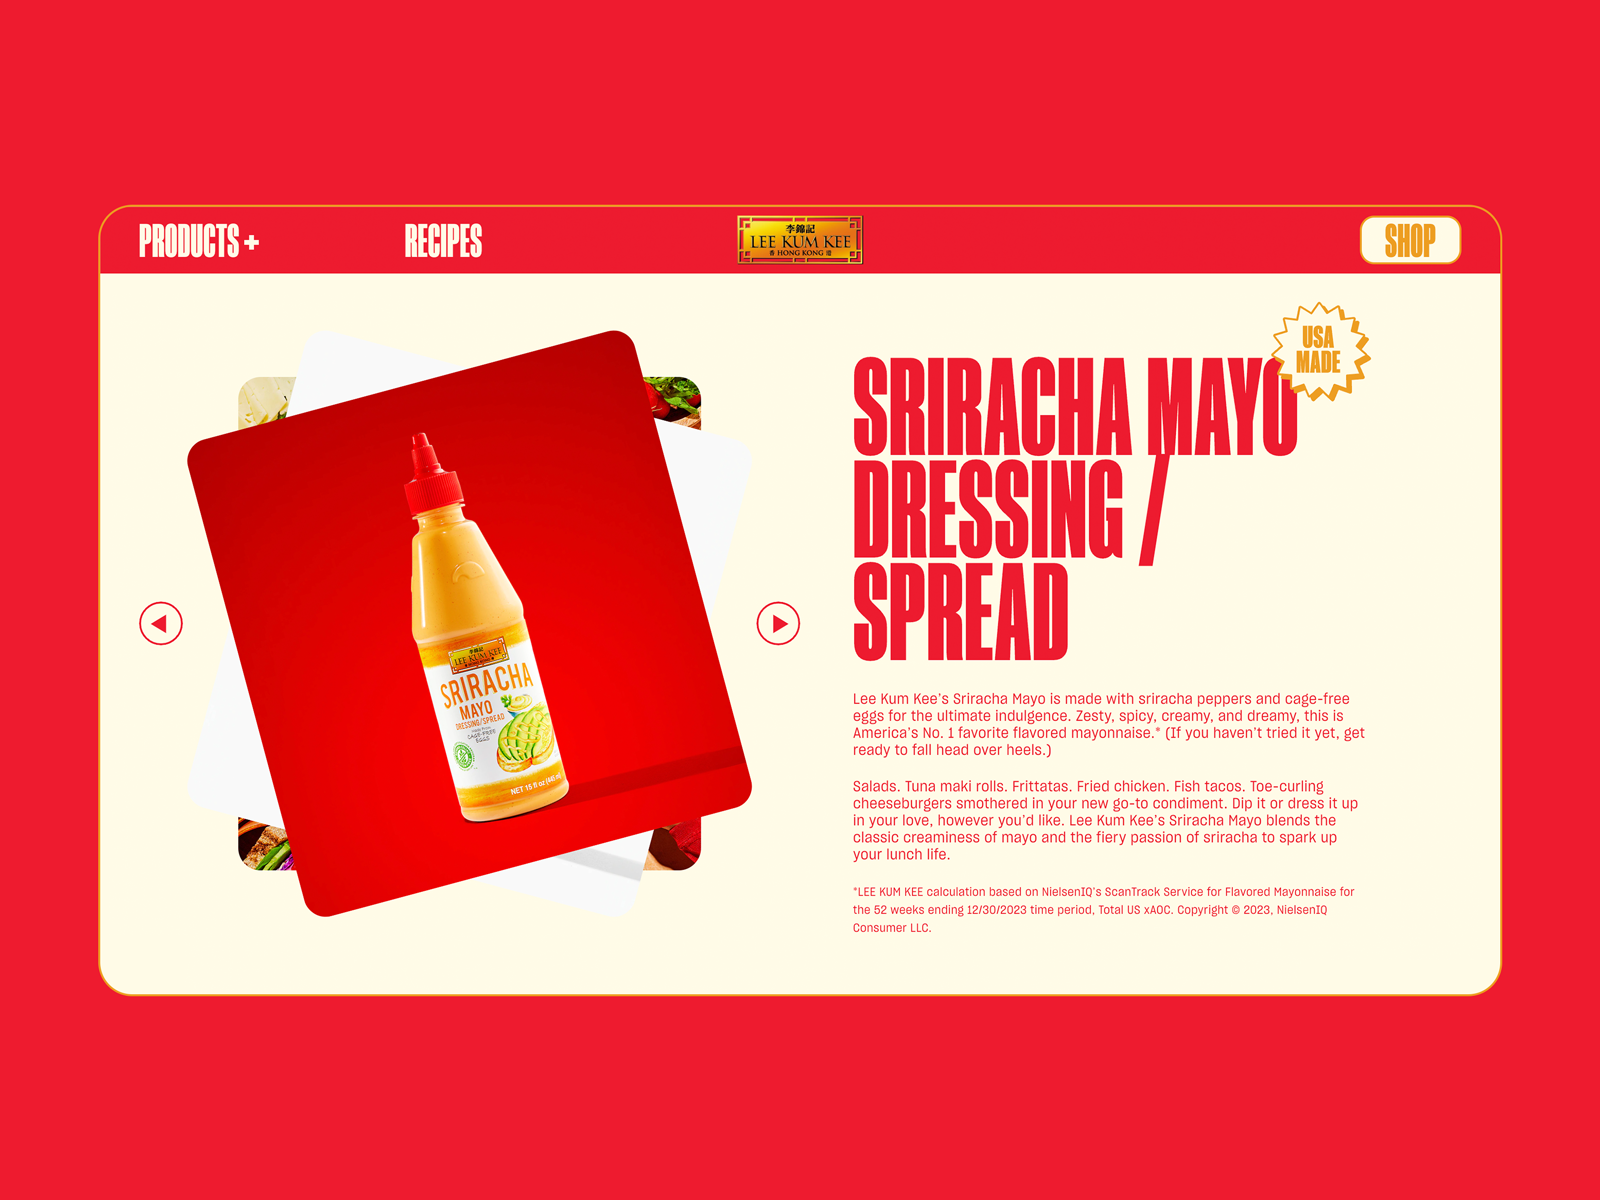 Sriracha Mayo Dressing / Spread